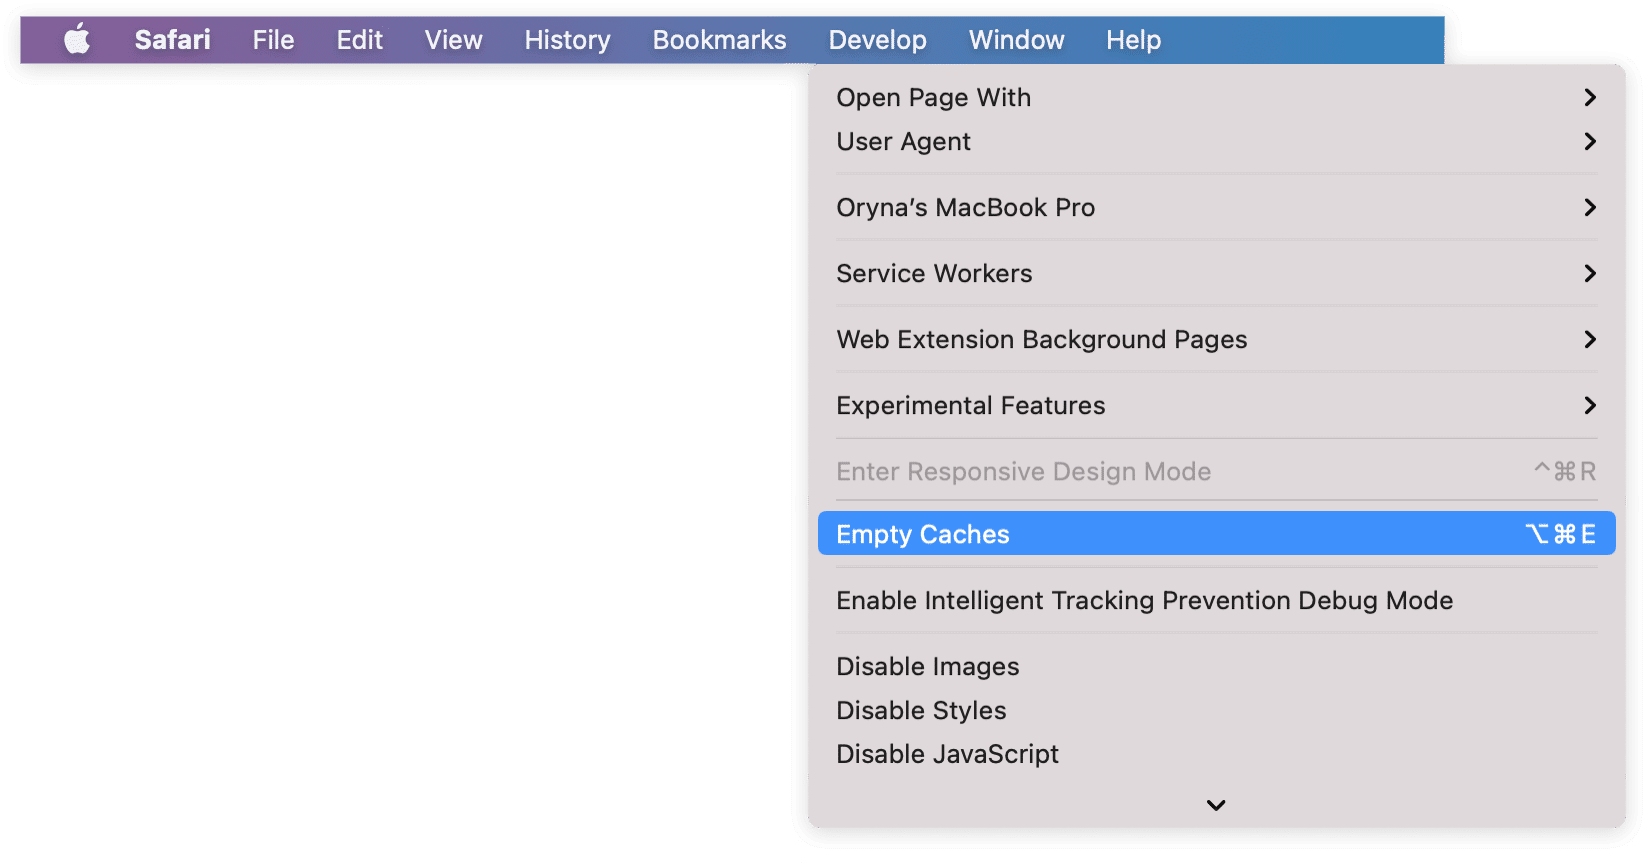 Empty caches option selected in Safari Develop drop-down menu